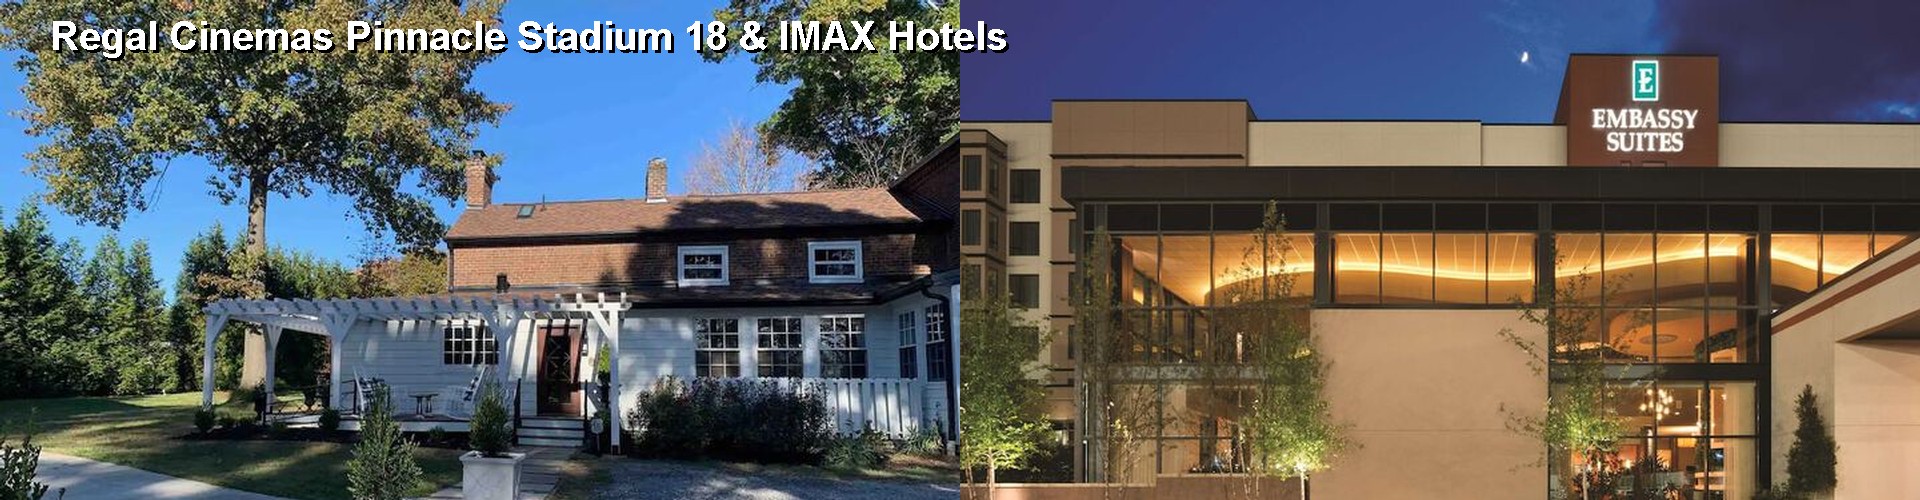 5 Best Hotels near Regal Cinemas Pinnacle Stadium 18 & IMAX